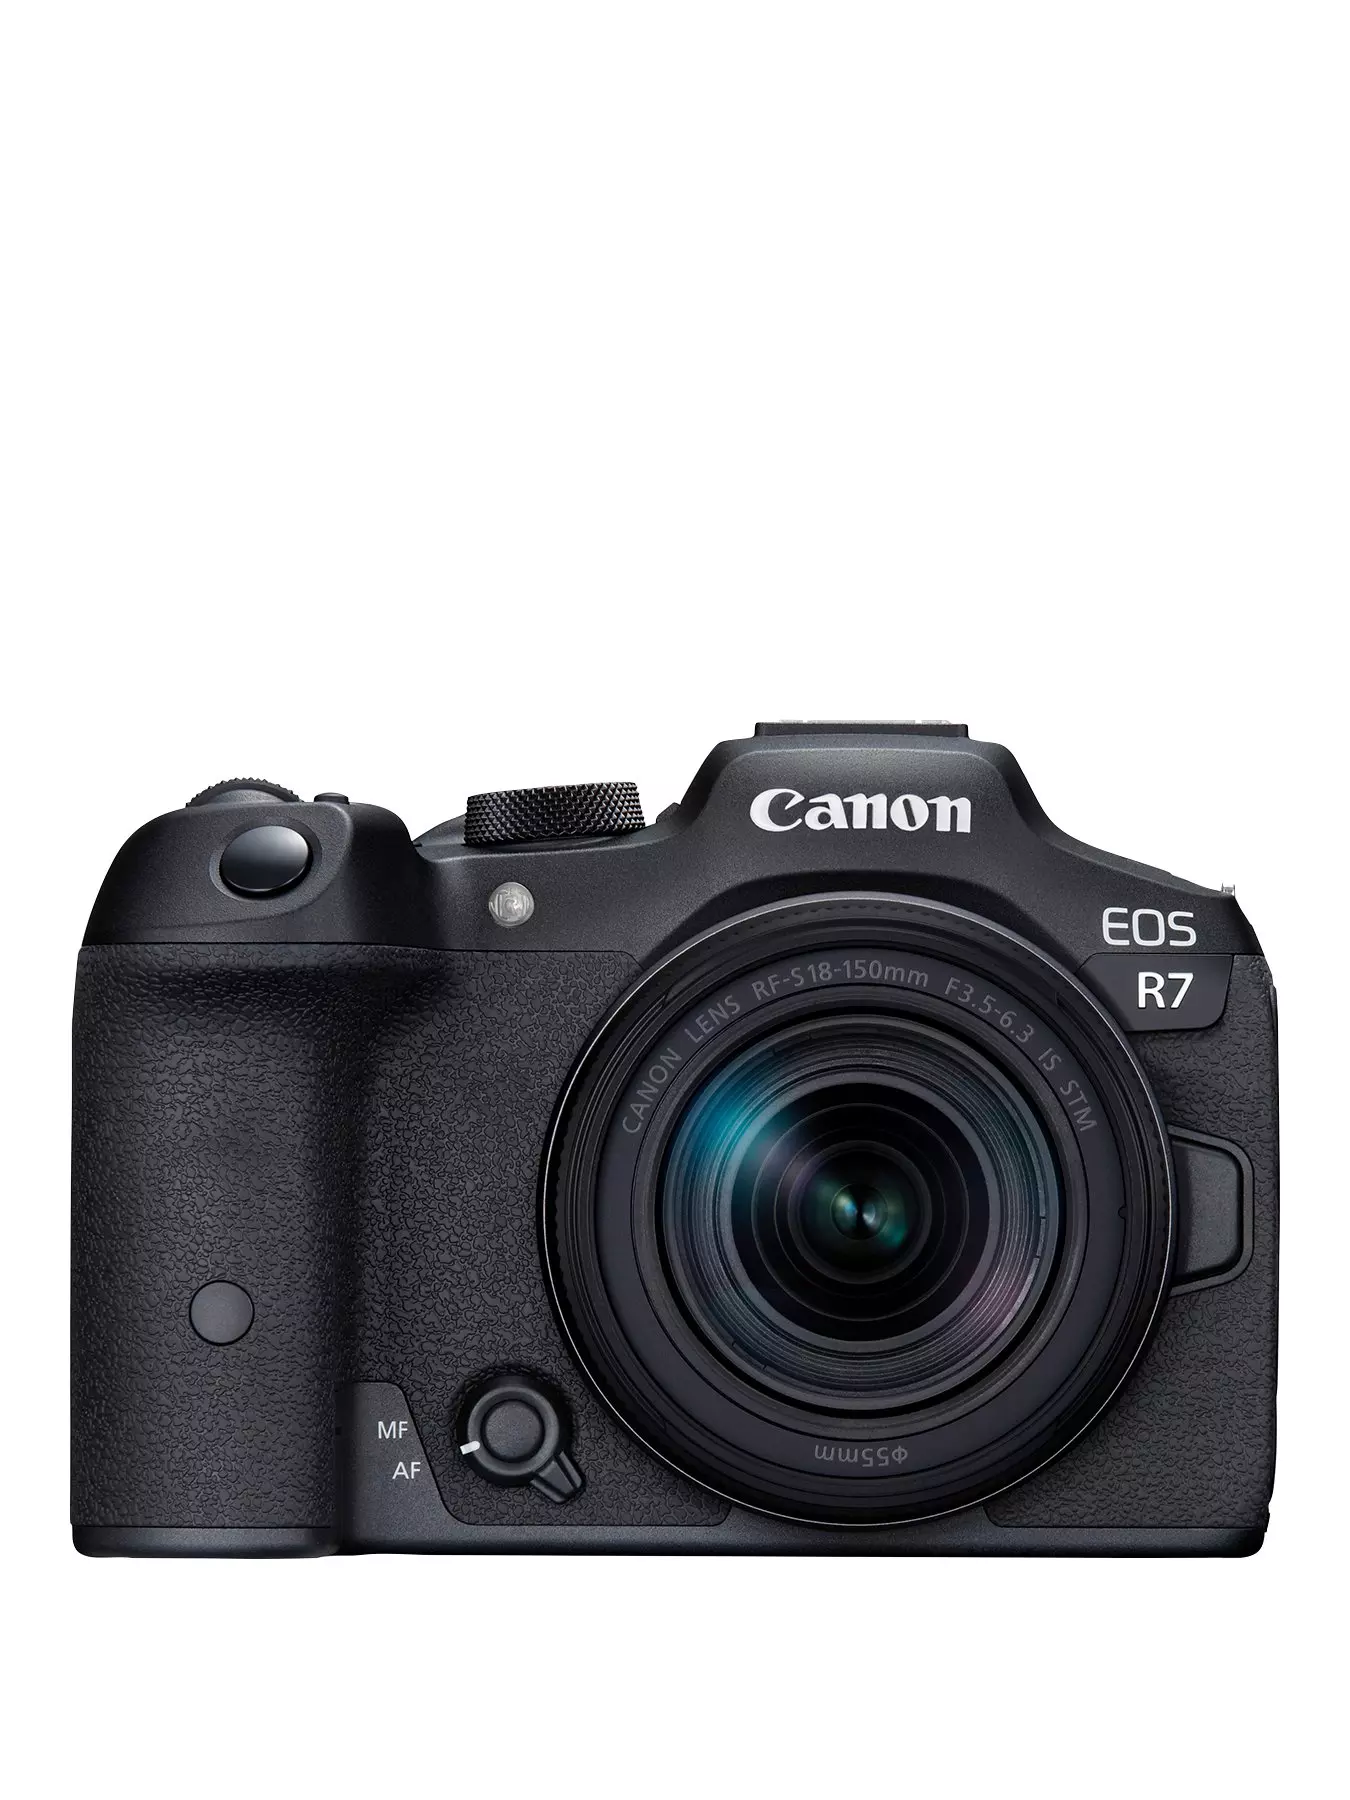 Canon EOS 90D - Digital camera - SLR - 32.5 MP - 4K / 30 fps - 7.5x optical  zoom EF-S 18-135mm IS USM lens - Wi-Fi, Bluetooth 